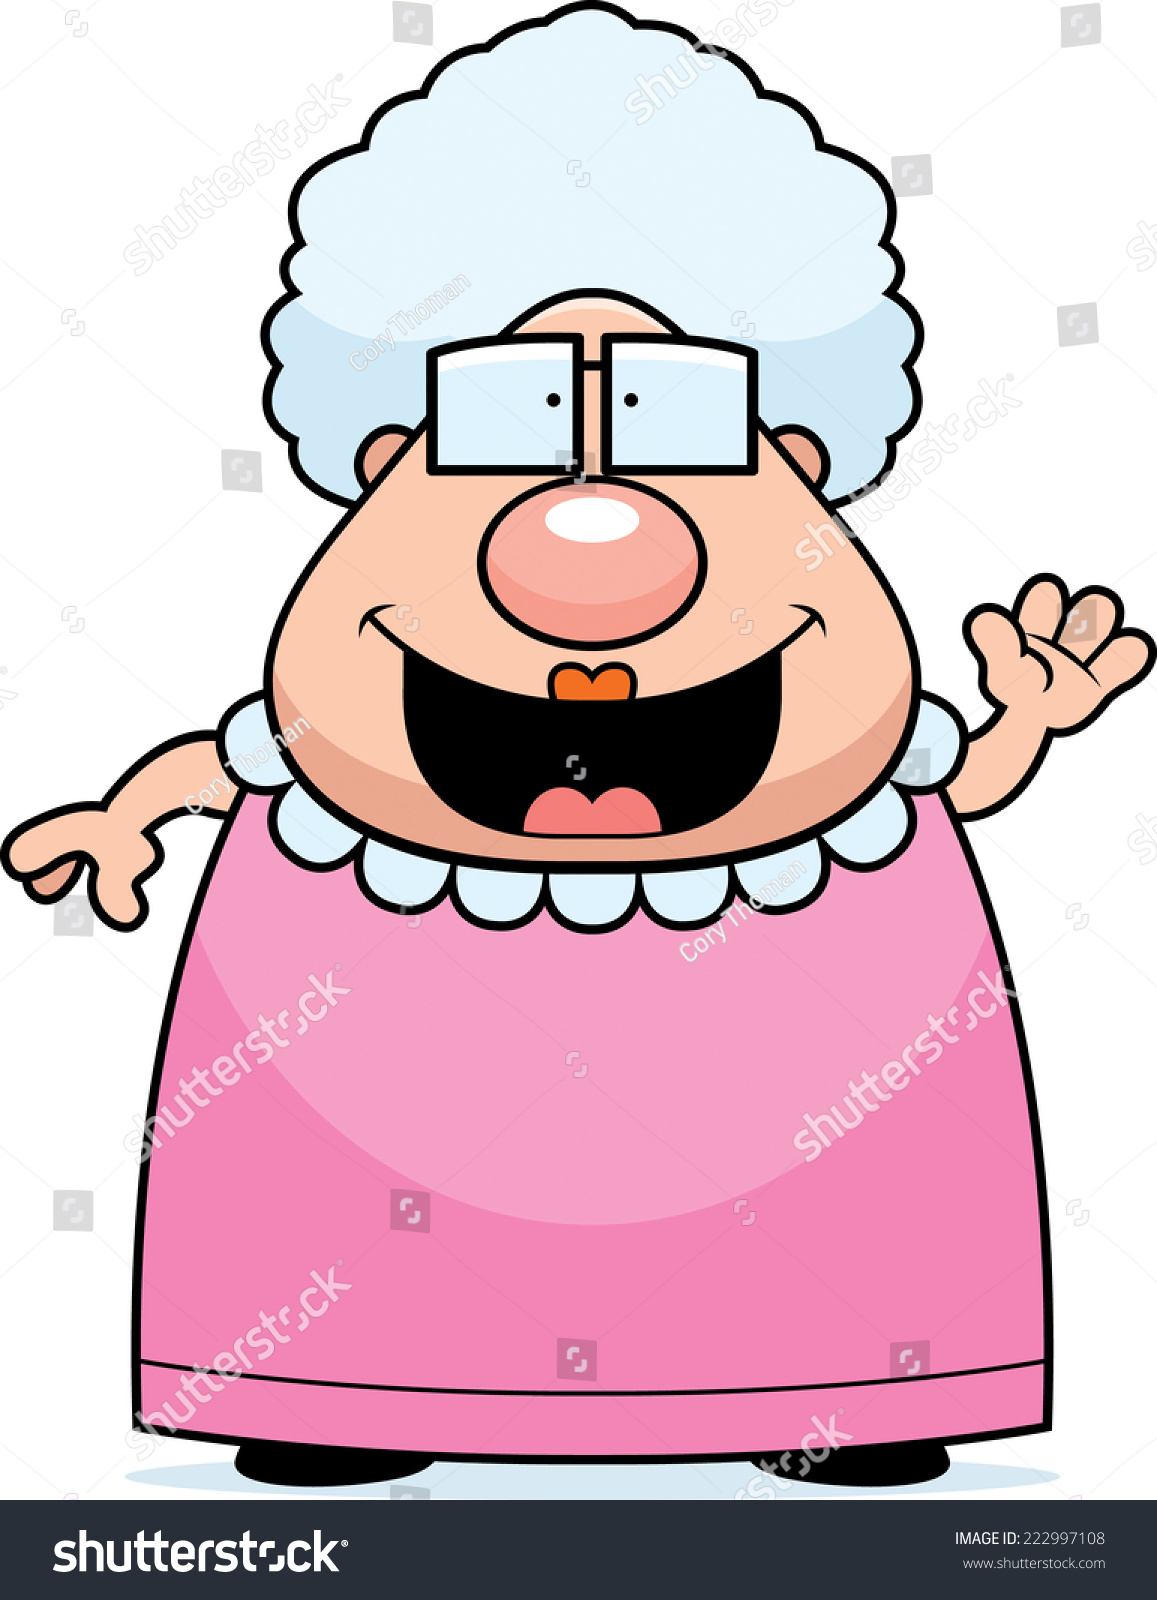 A cartoon illustration of a grandma waving and smiling. #222997108